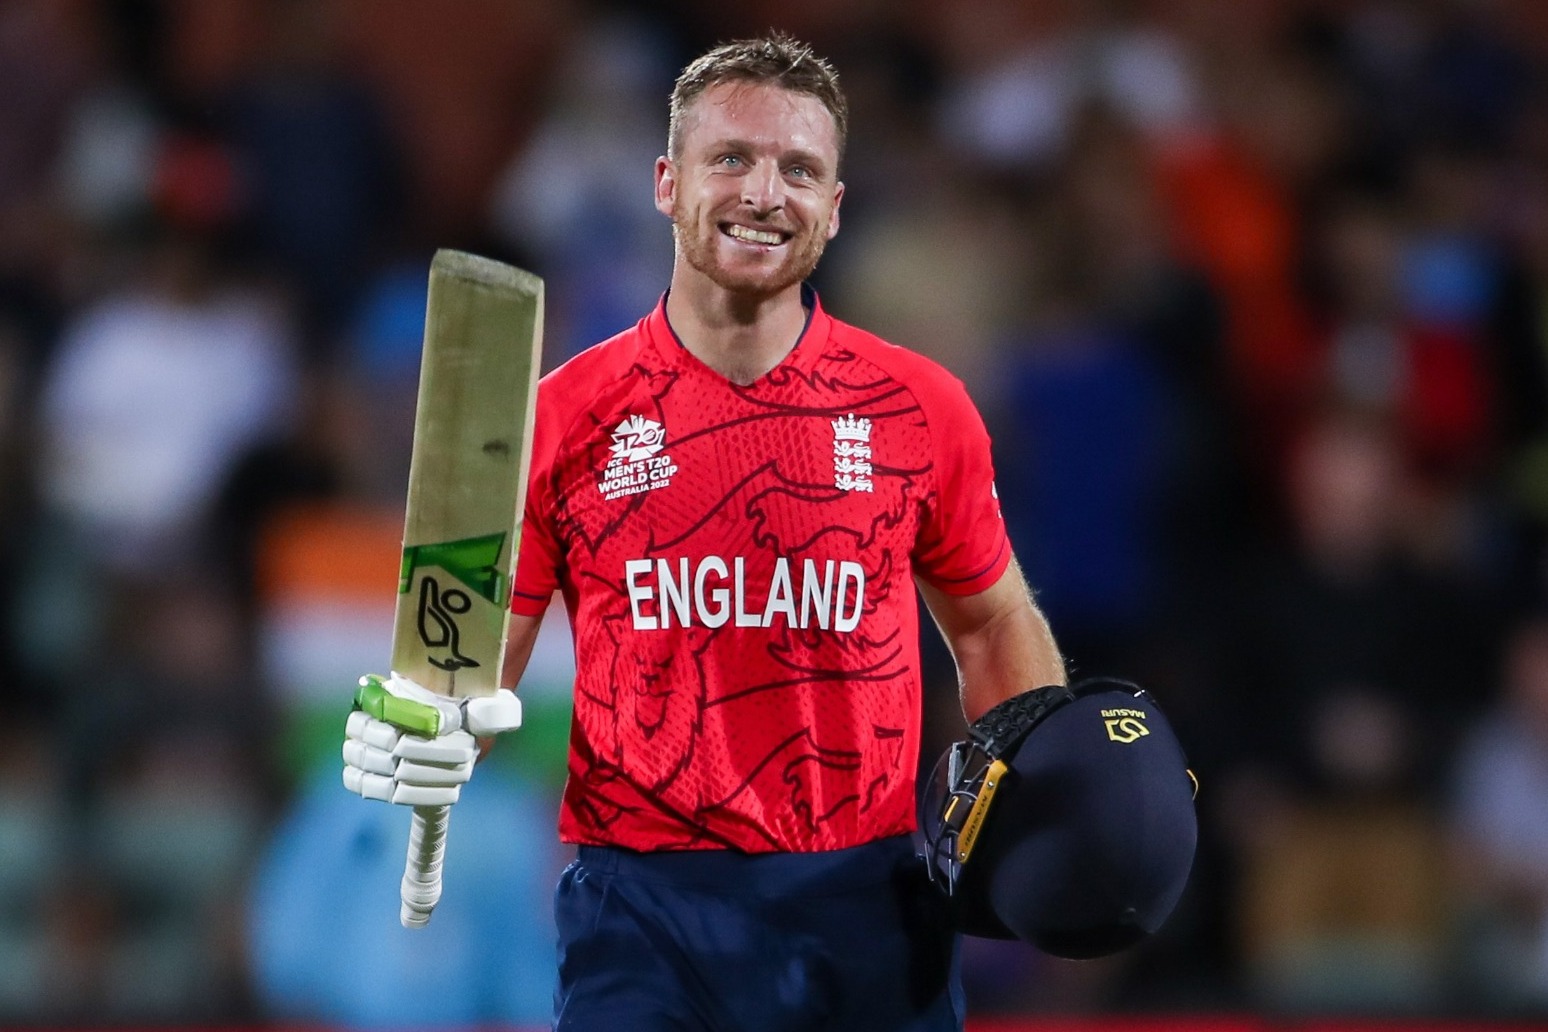 England denied as South Africa take ODI series 